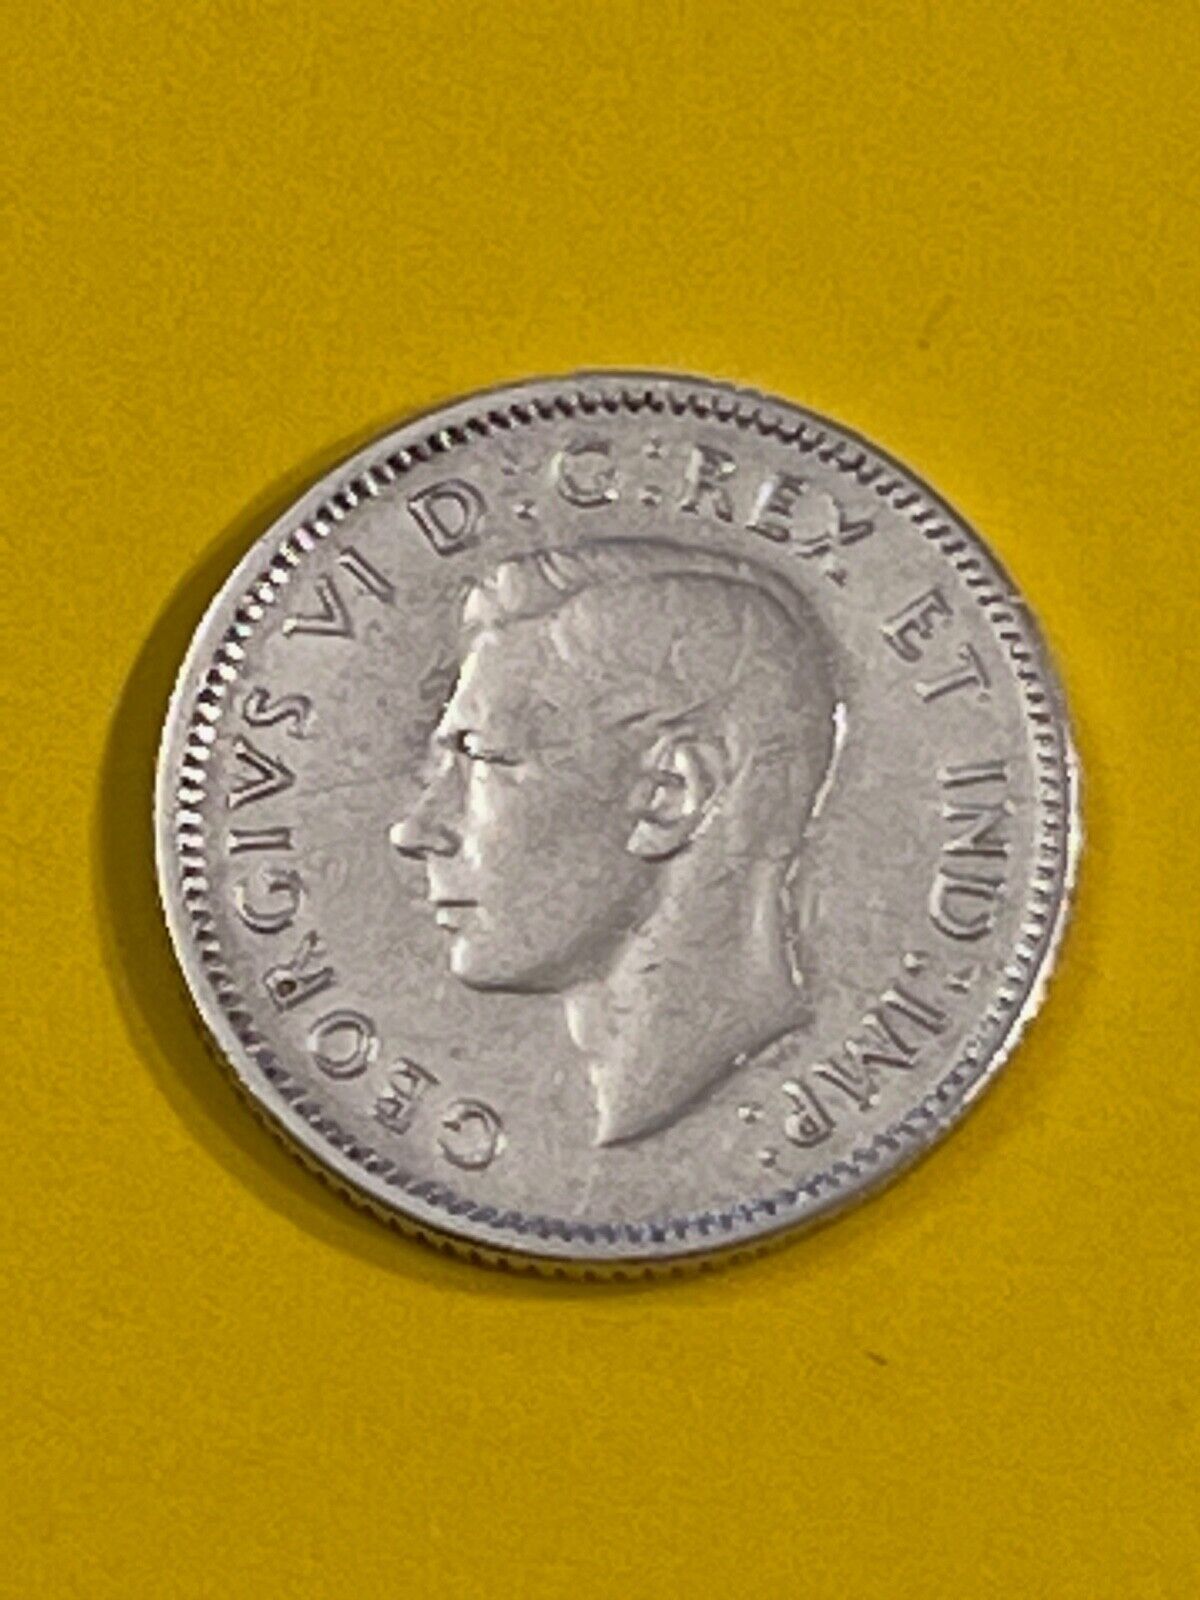 Coin Canada 1947-10 Cents 800 Silver Georgius D.g Rex Free Shipping